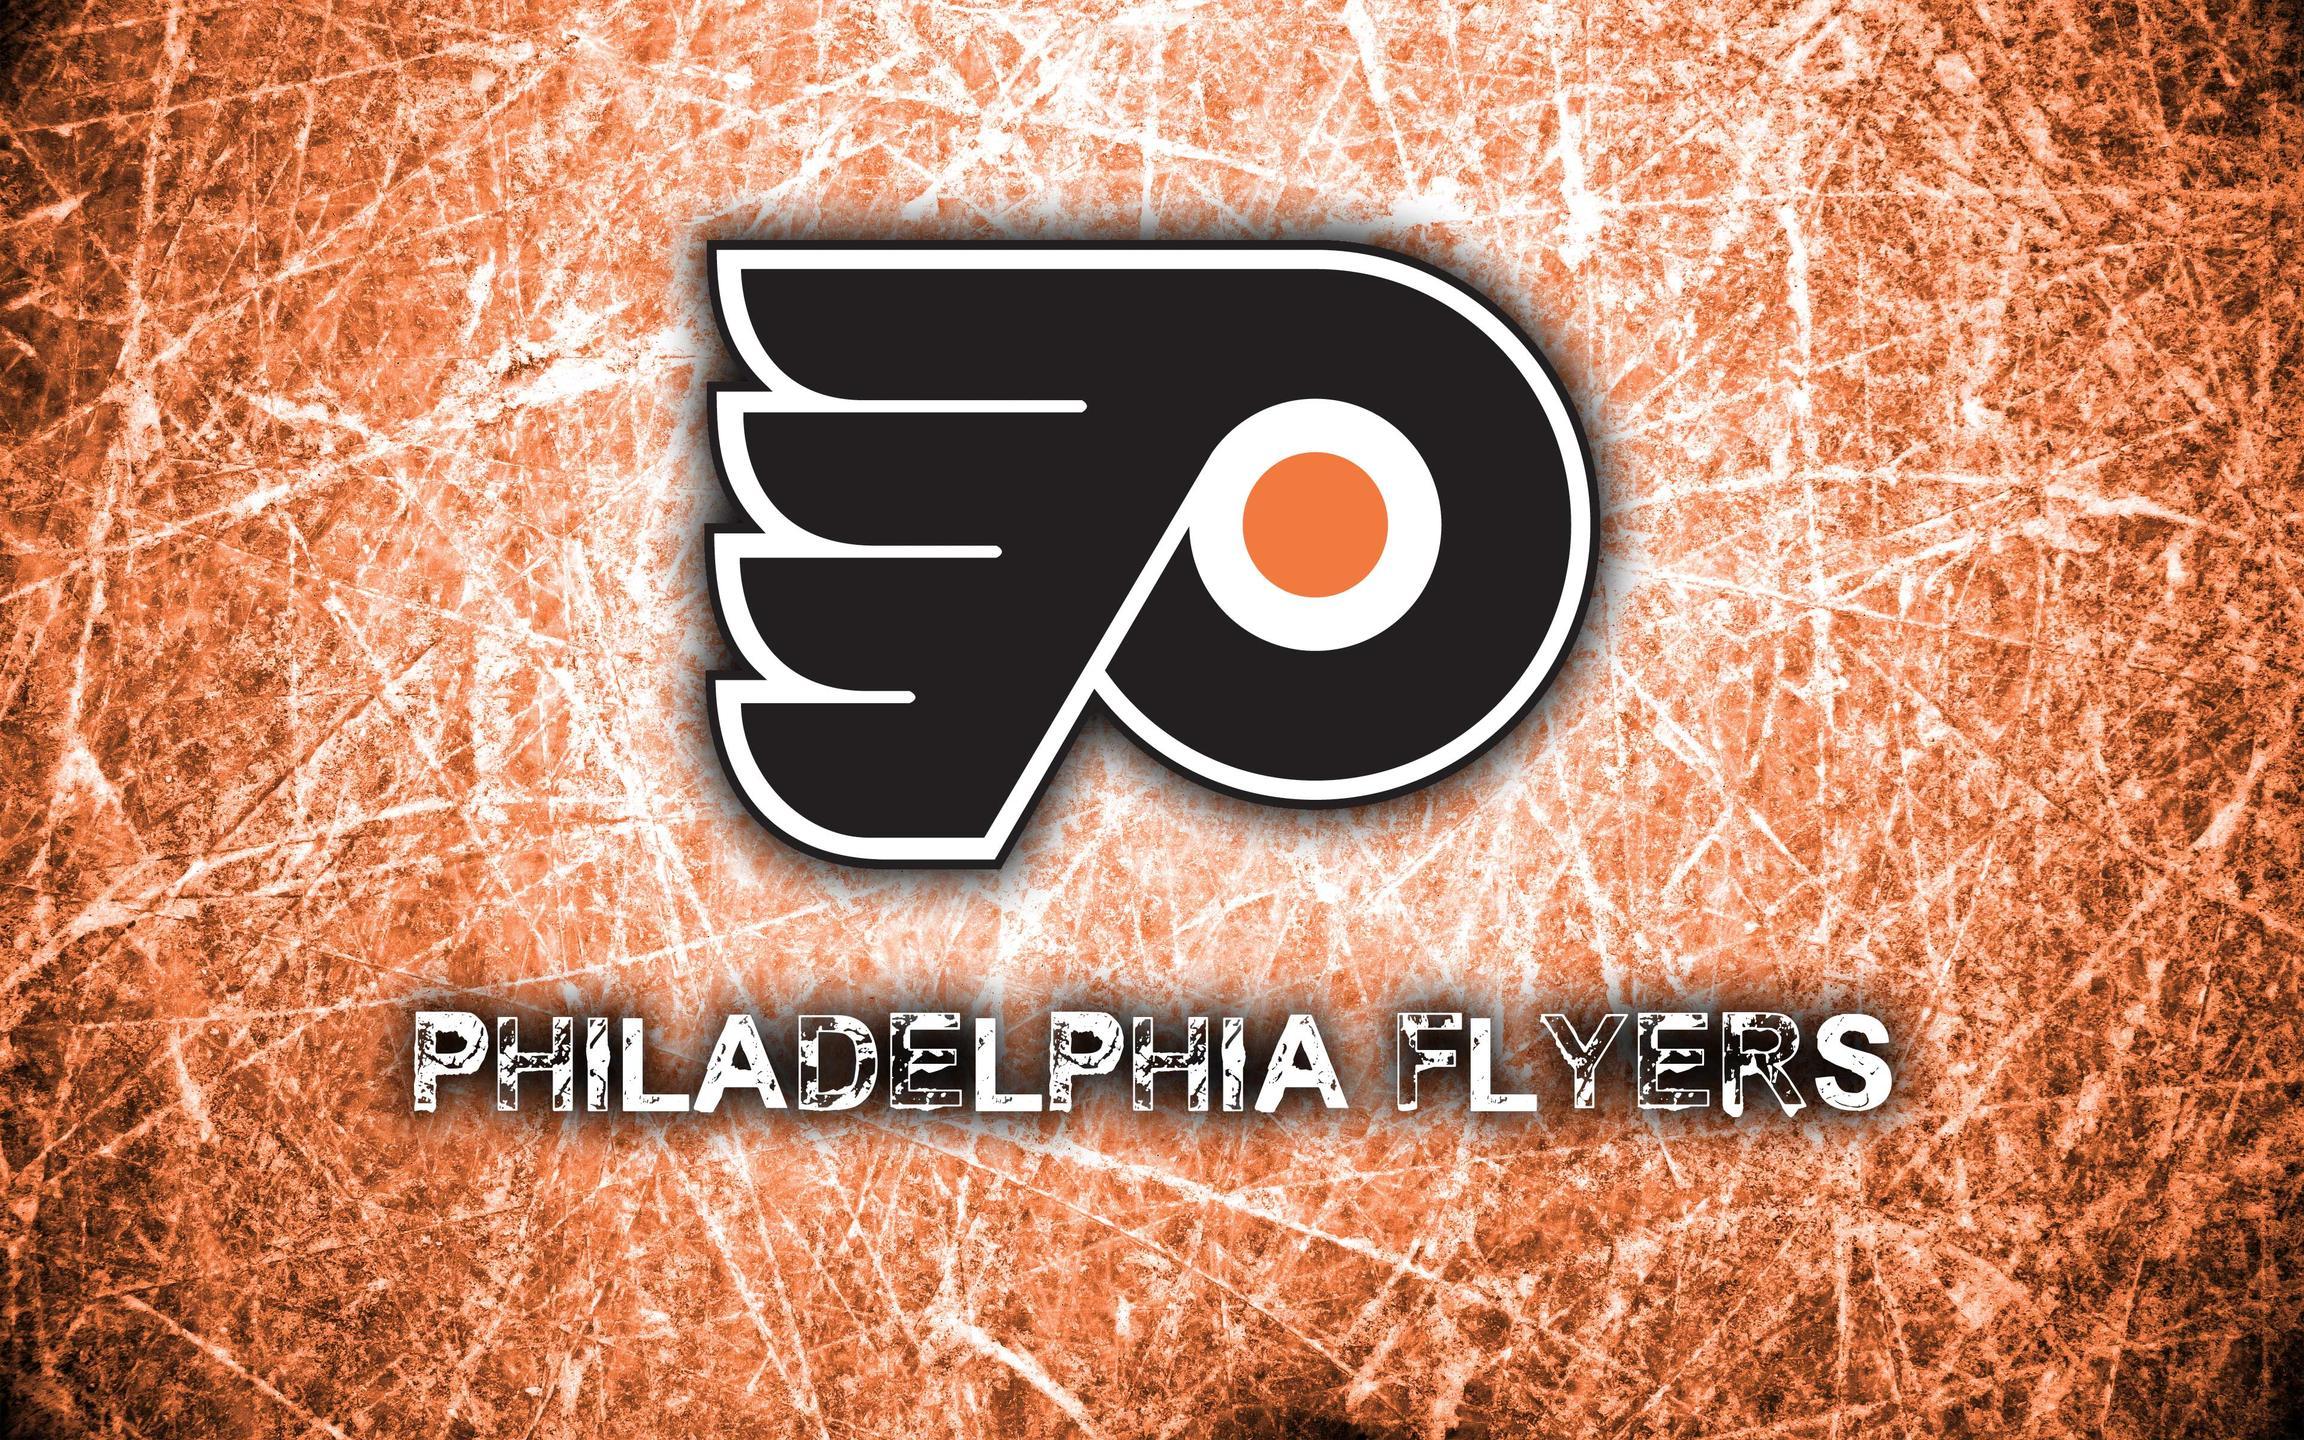 Philadelphia Flyers Desktop Wallpaper. Image